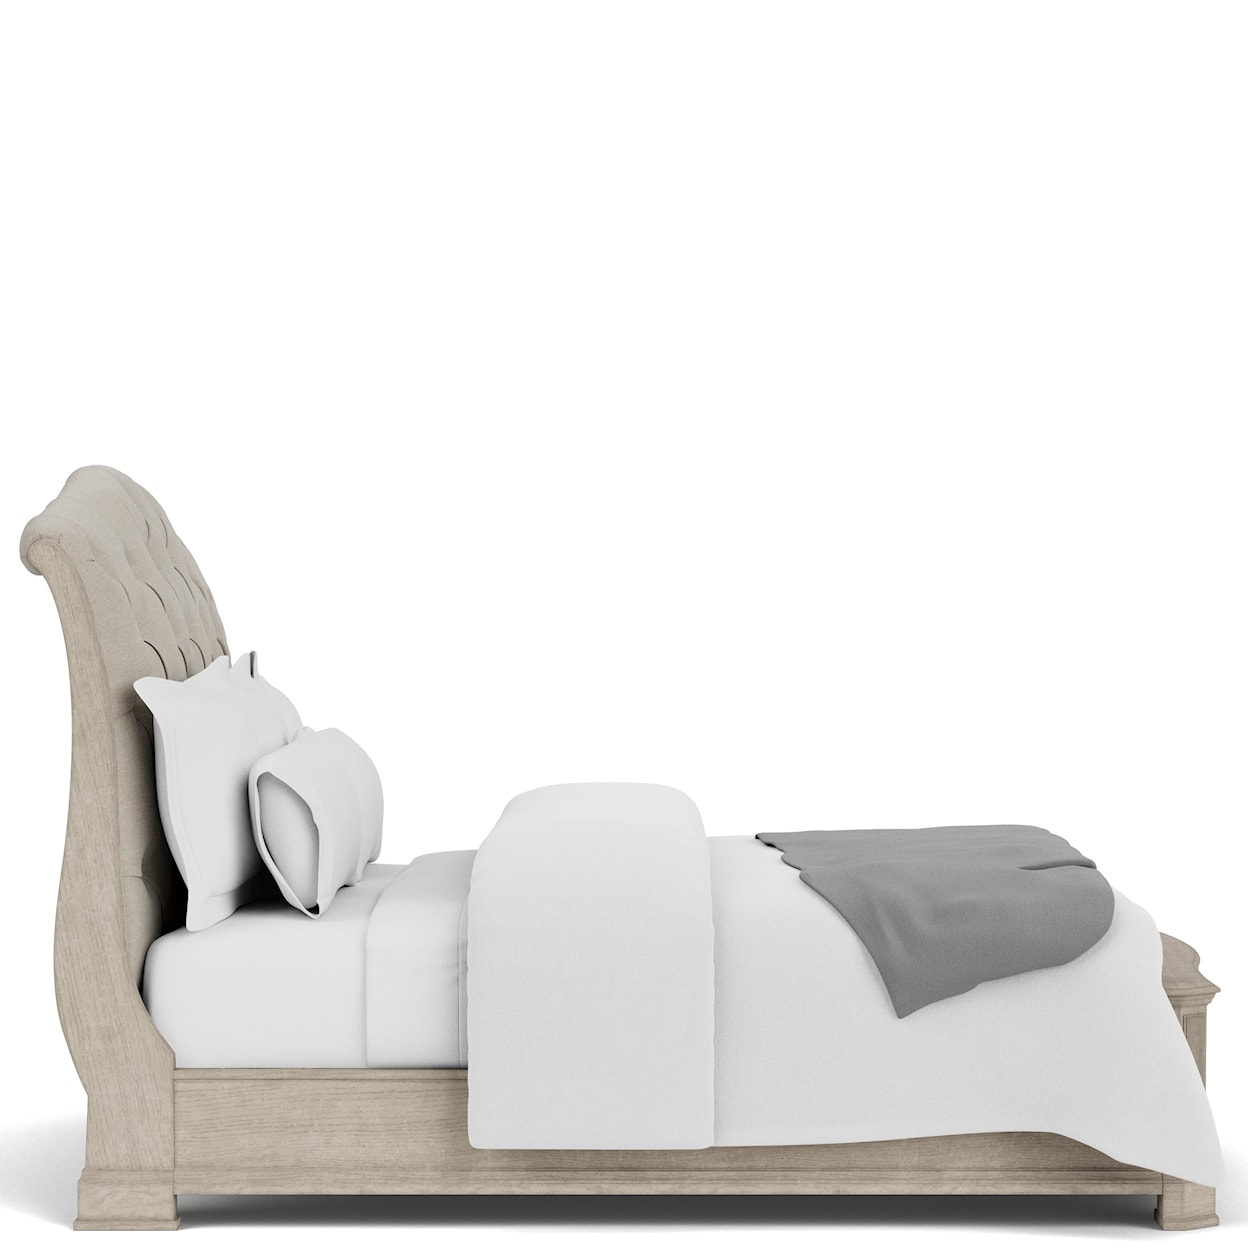 Riverside Furniture Kensington Queen Sleigh Bed with Upholstered Headboard